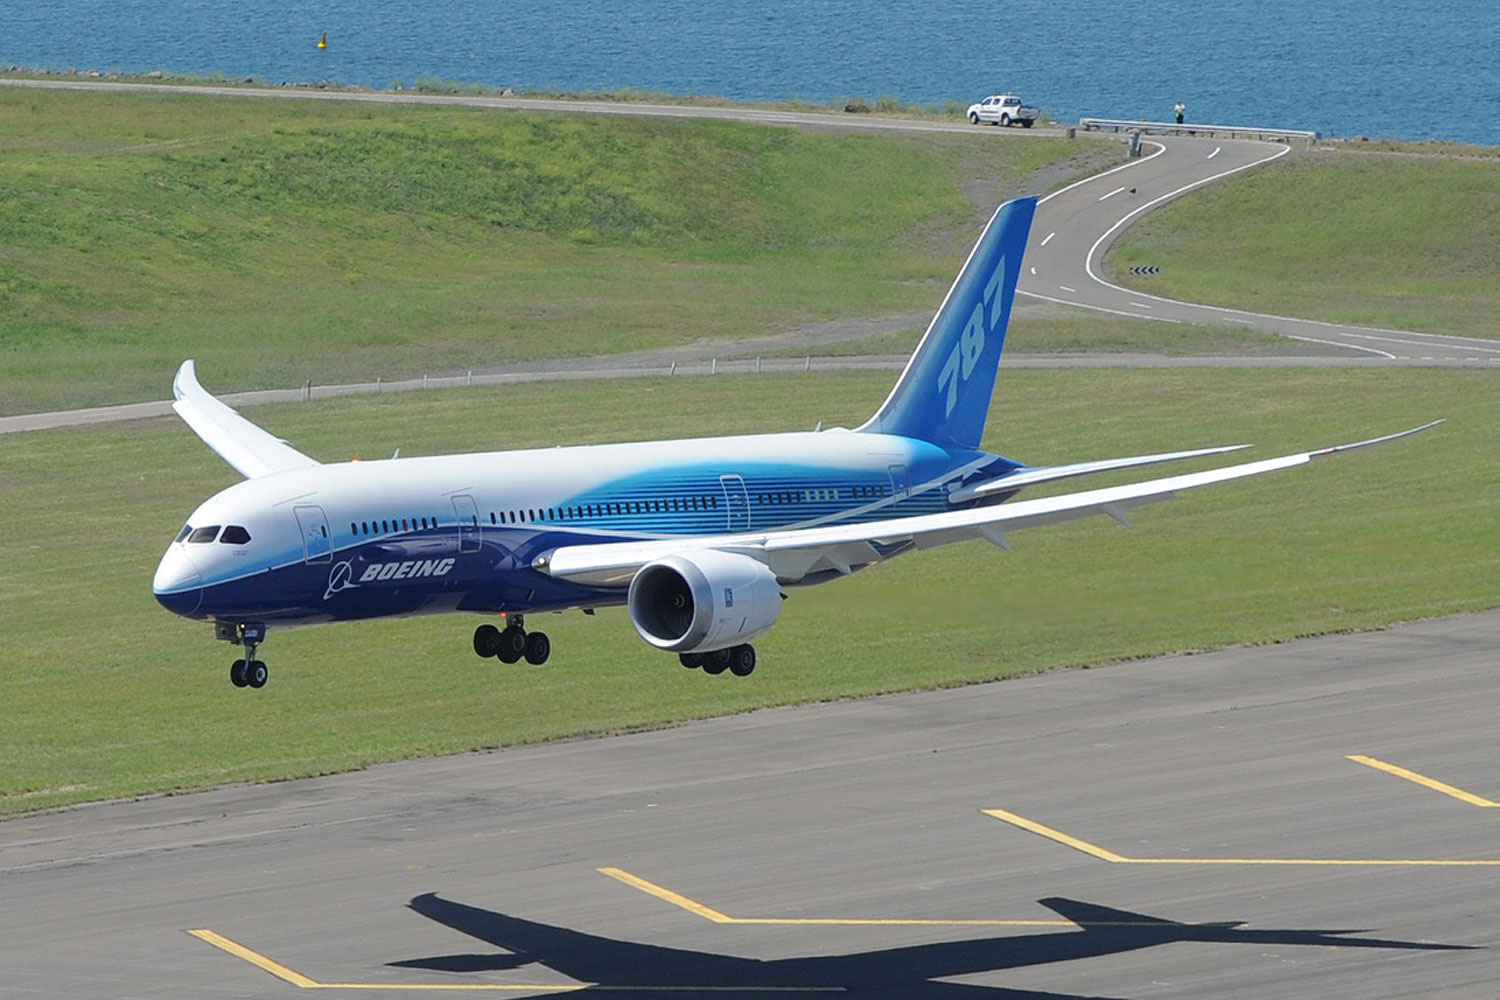 Boeing 787 Dreamliner (Jetstar Airways)